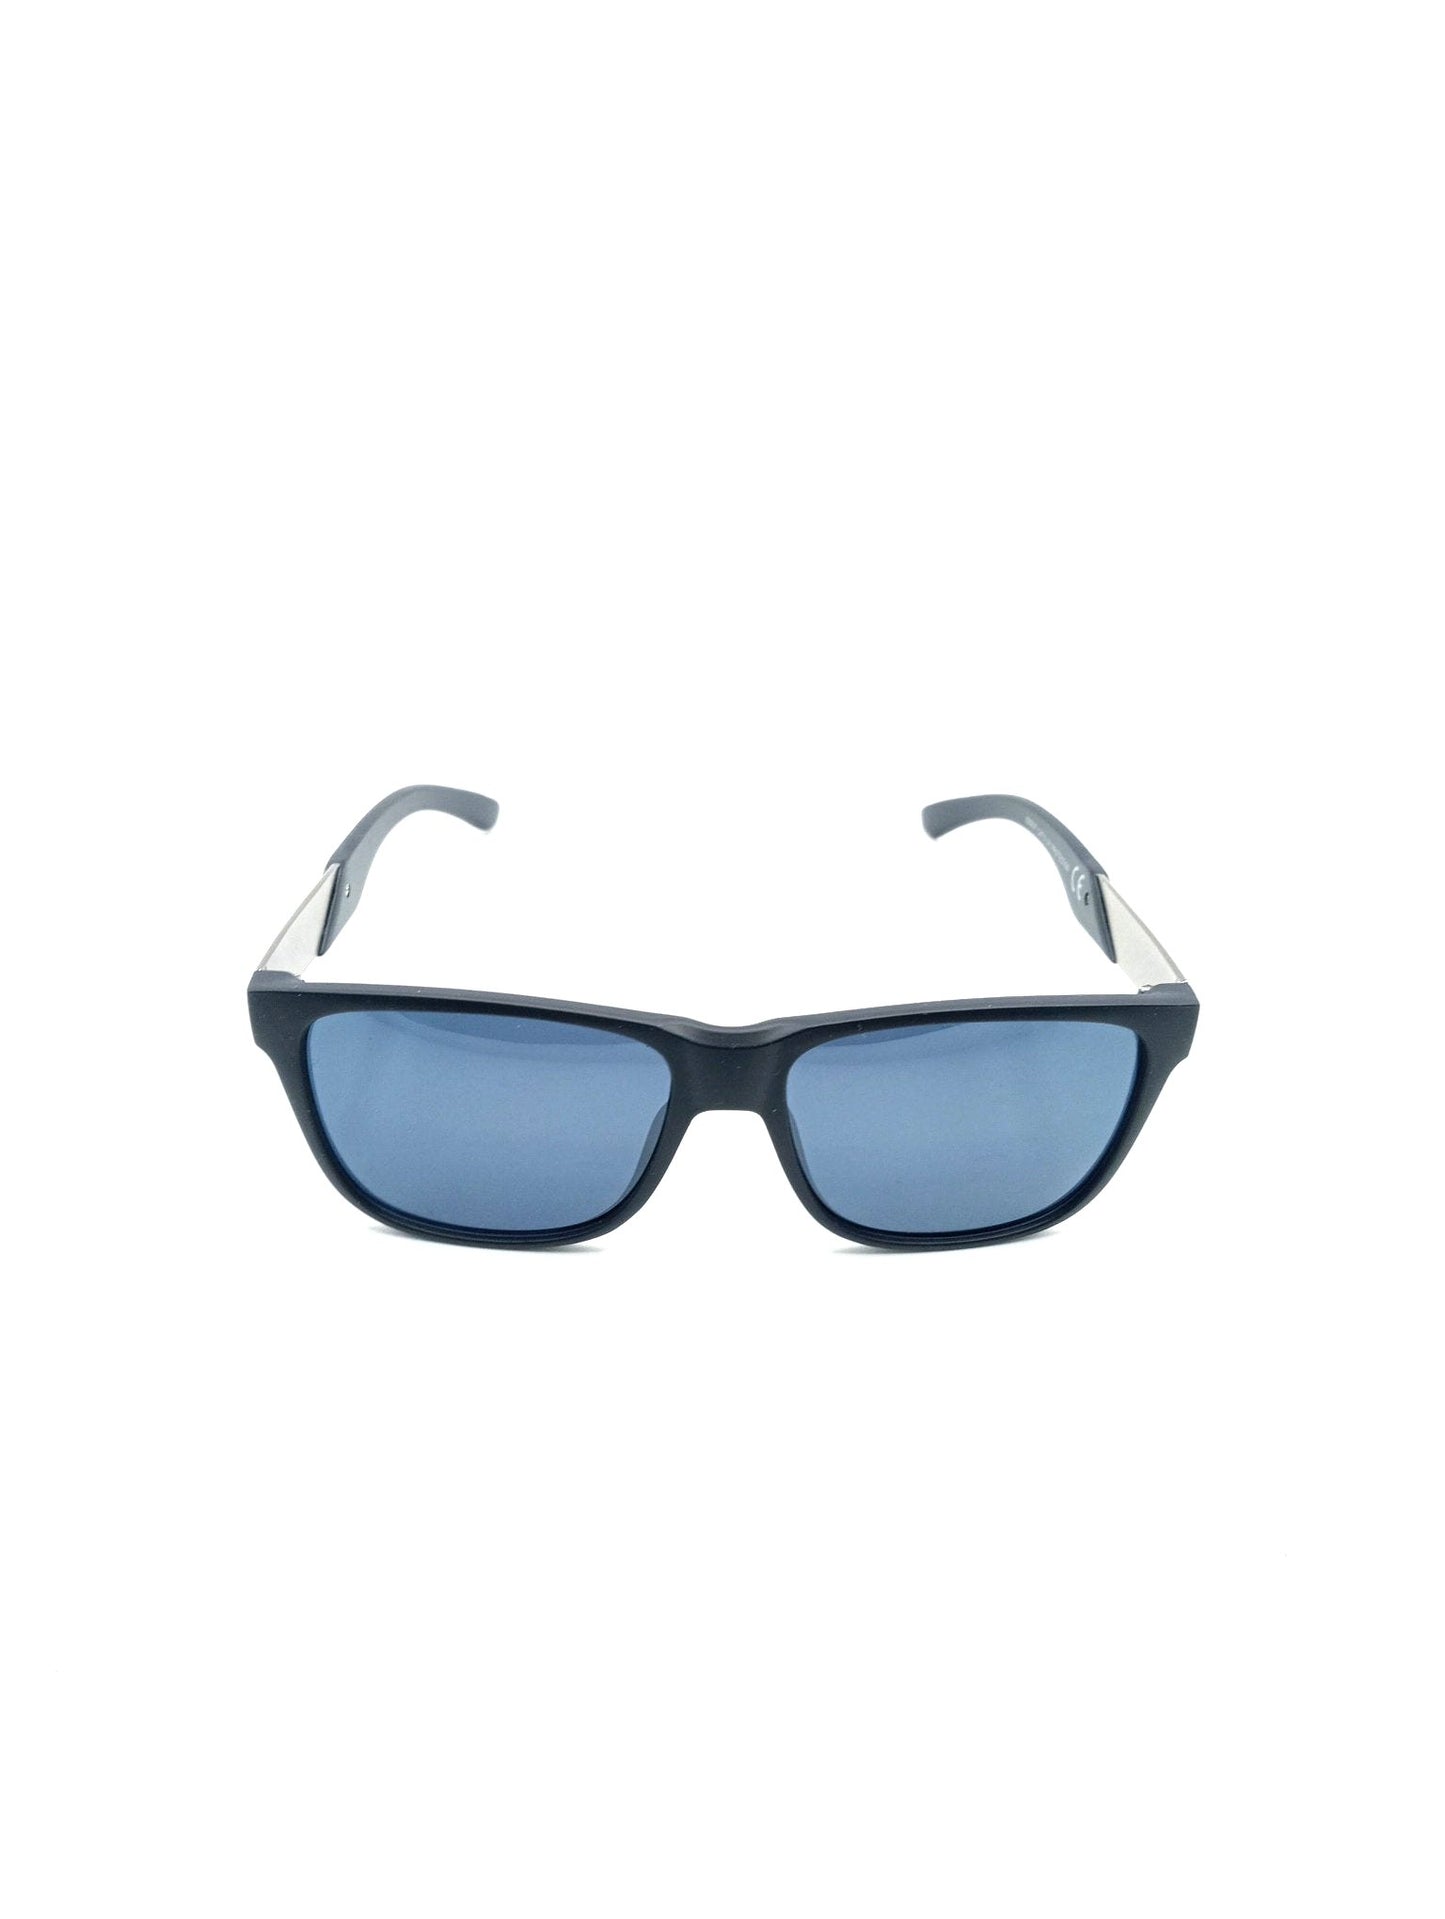 Qoolst Boston sunglasses for men and women